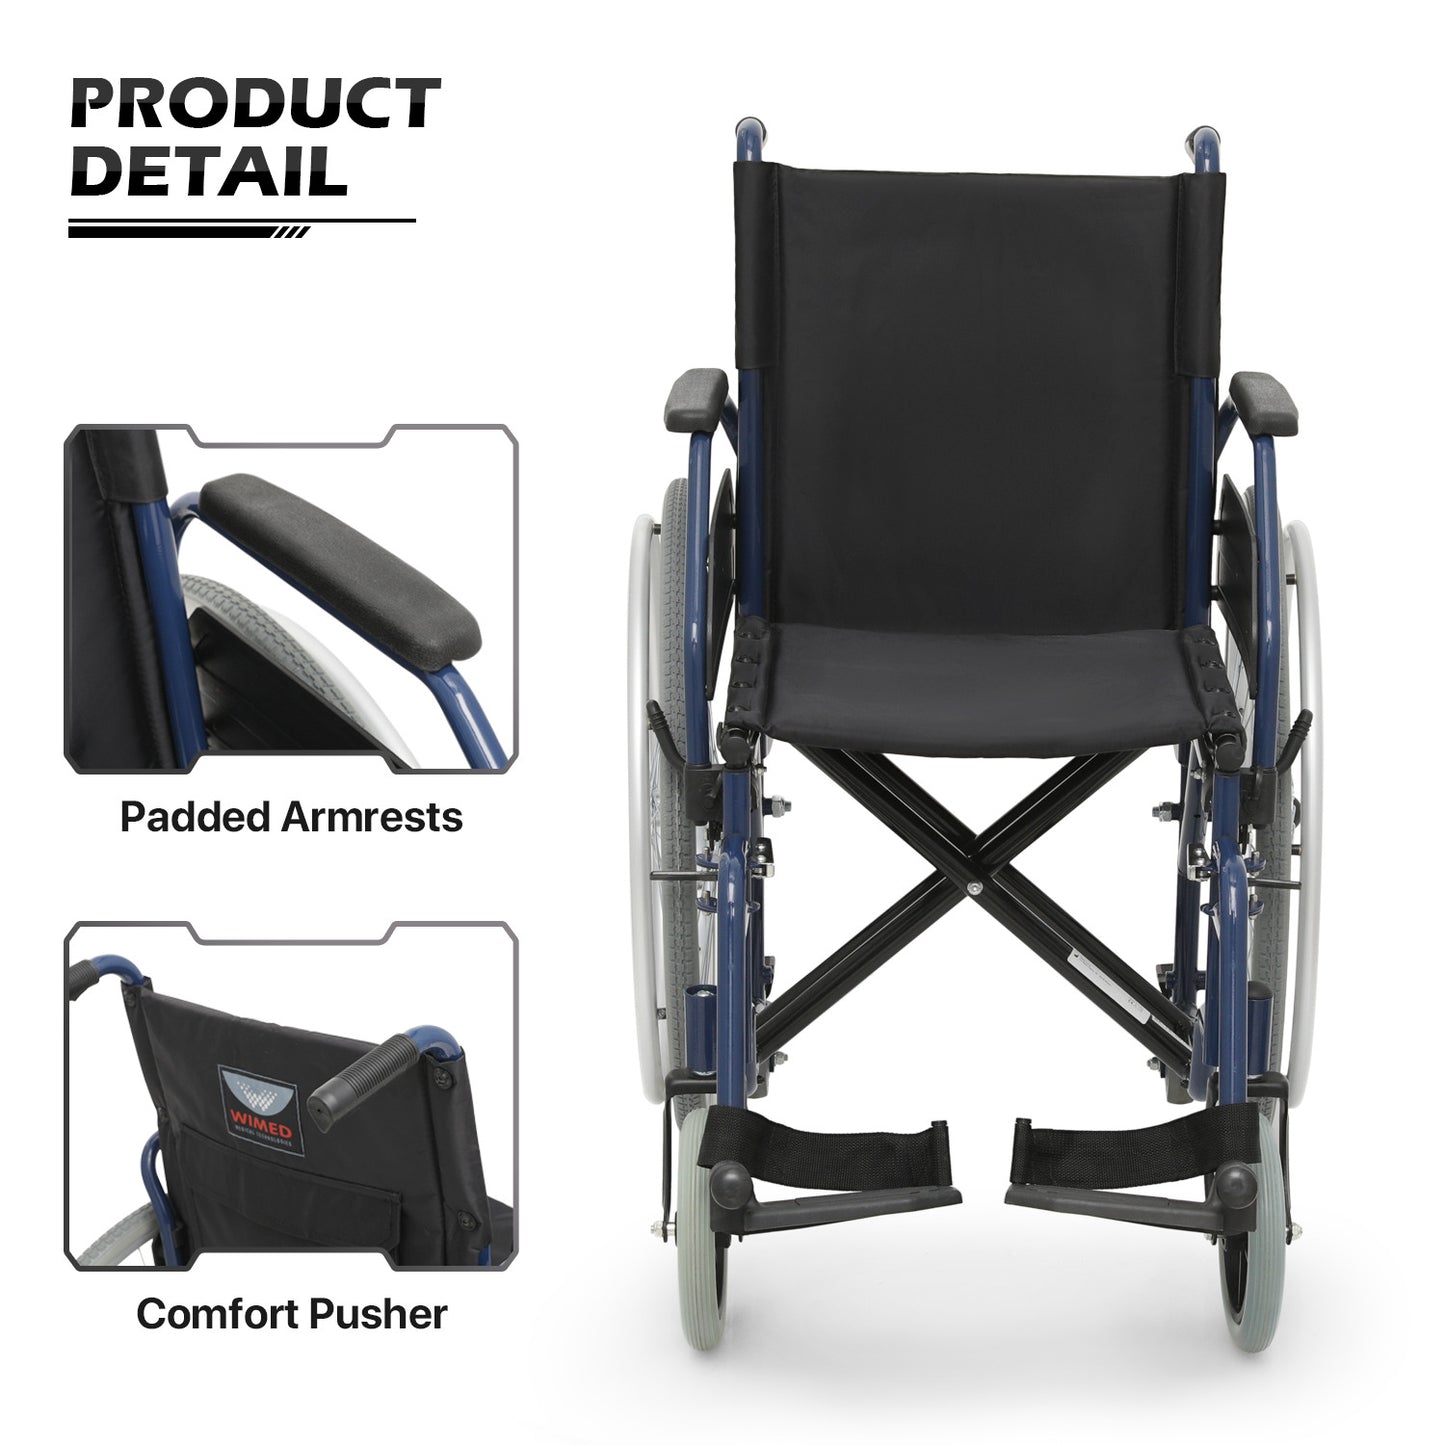 Manual Wheelchair - 7.5'' Front & 23.5'' Rear Wheel - 17"x15.5'' Nylon Seat